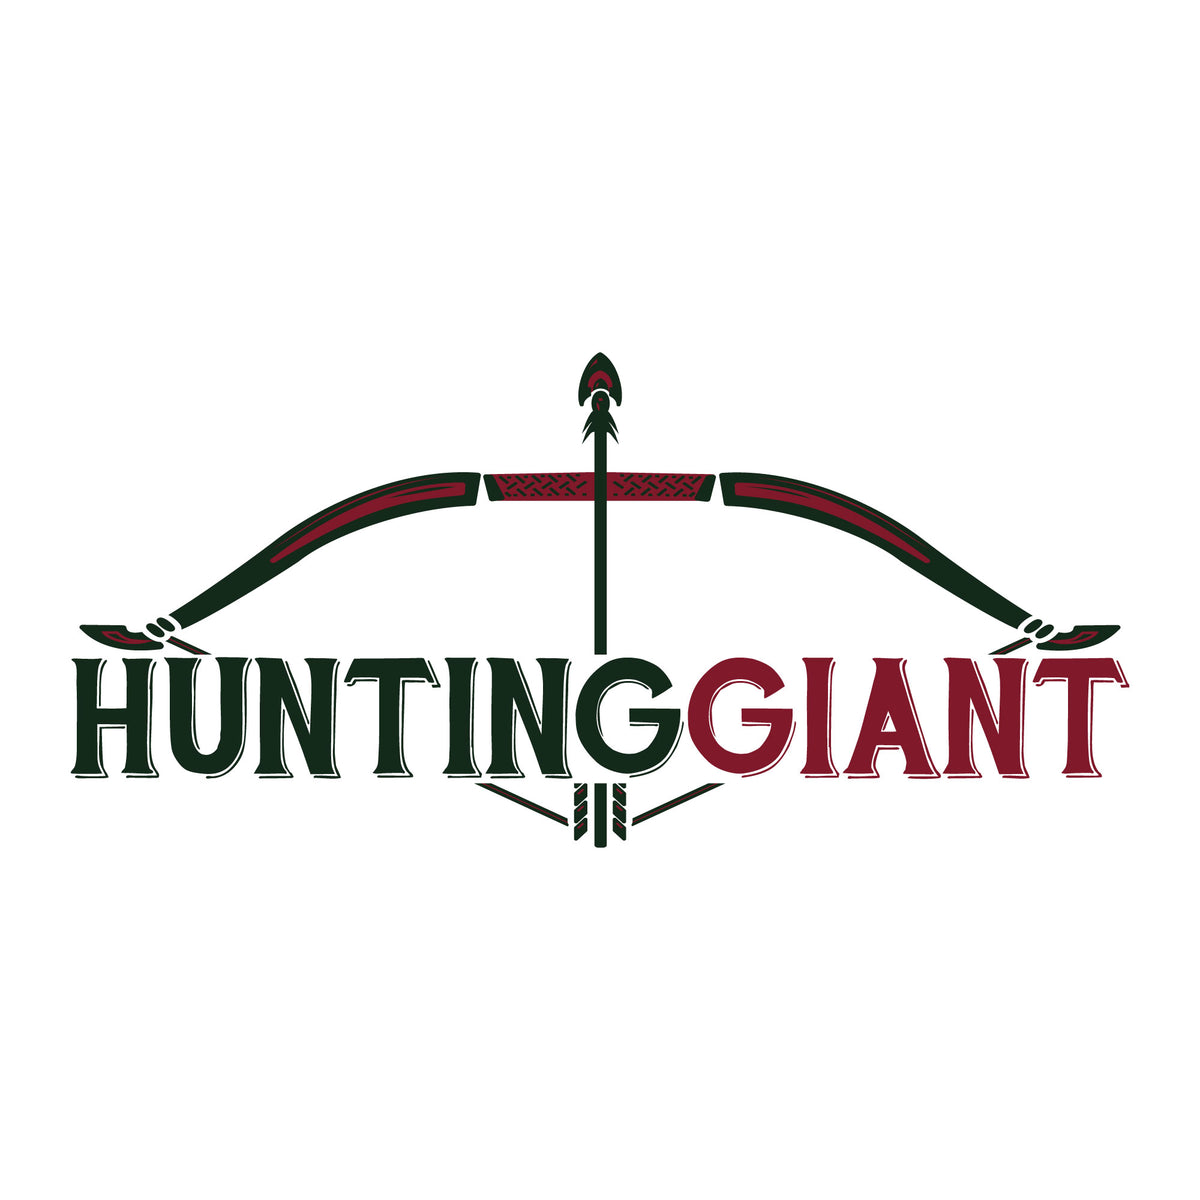 (c) Huntinggiant.com